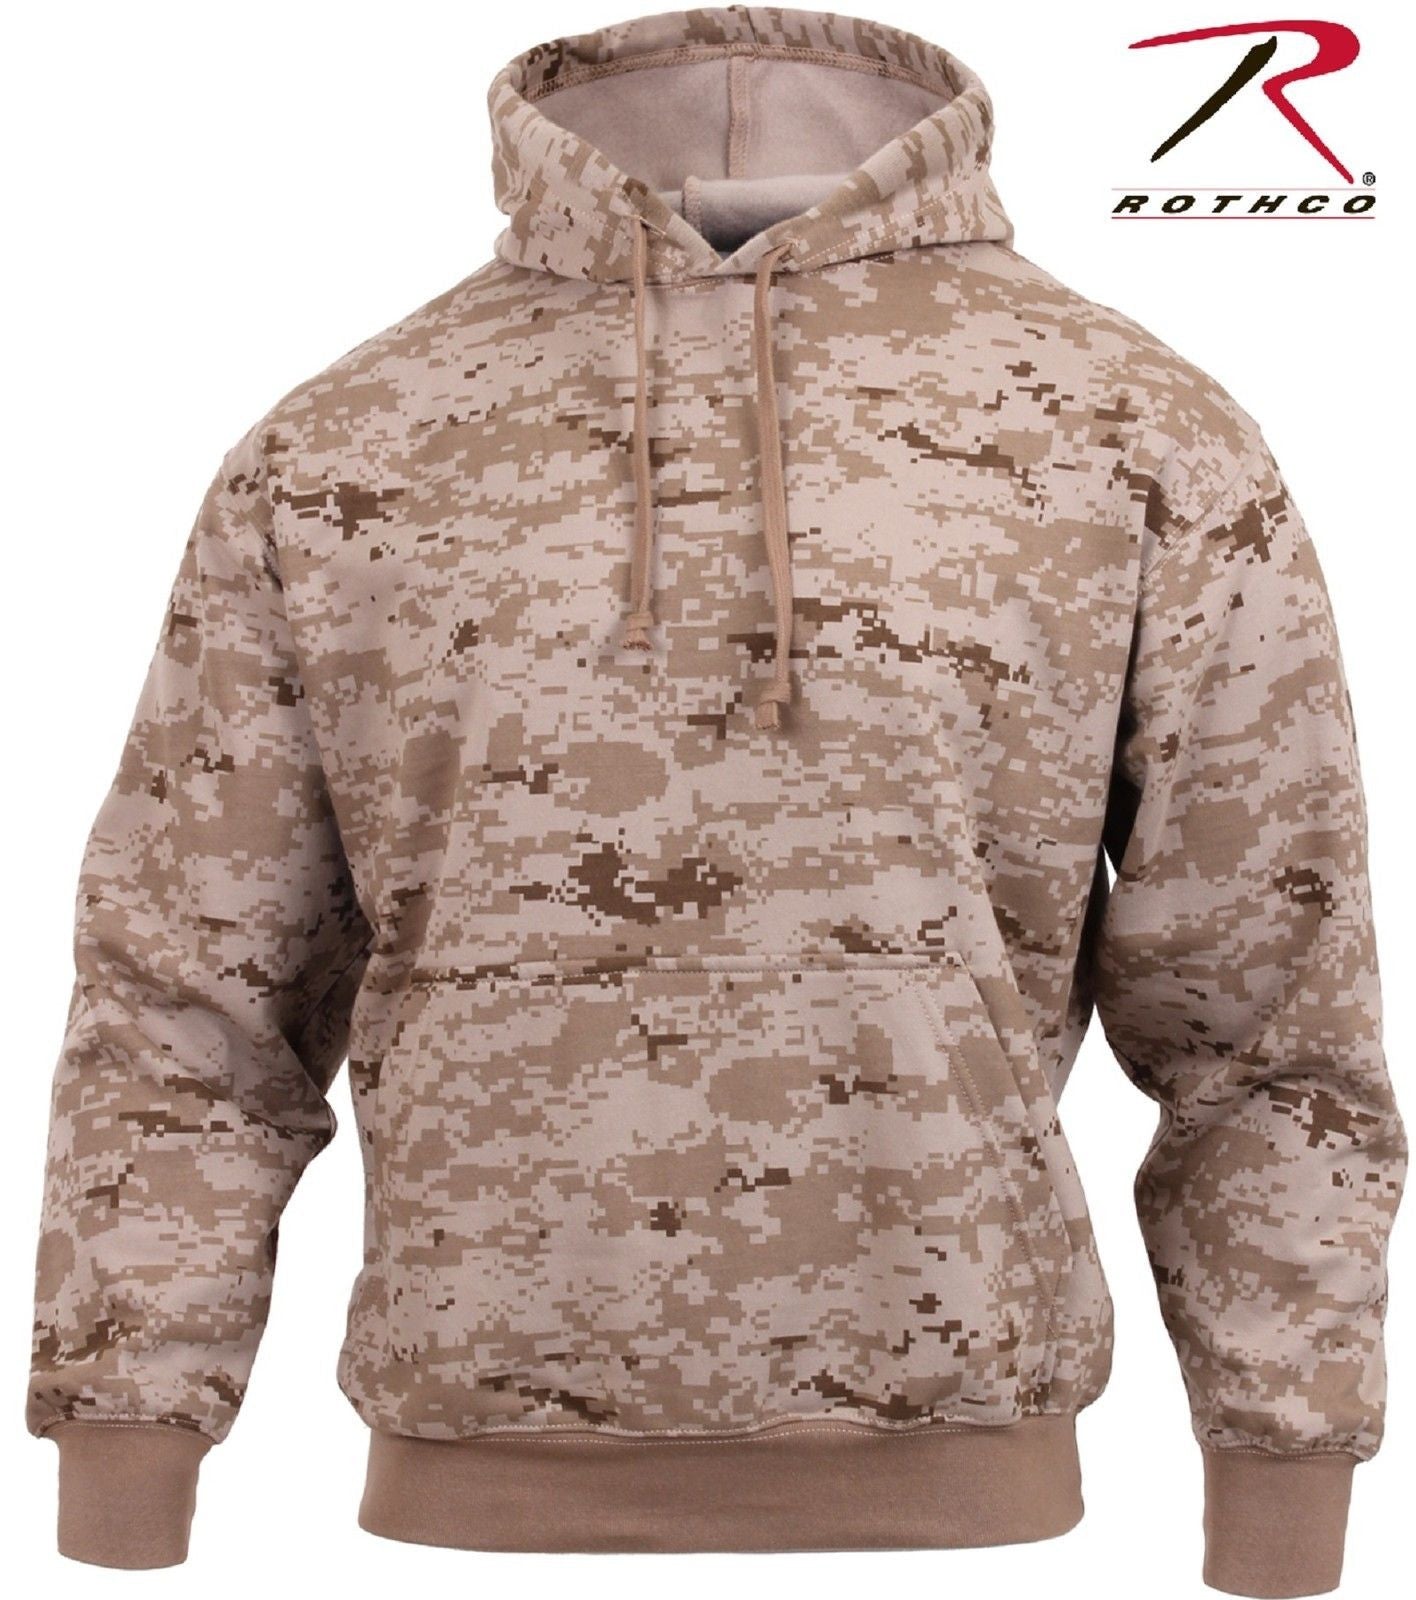 Mens Desert Digital Camo Hooded Sweatshirt - Rothco Fleece Lined Cotton Hoodie